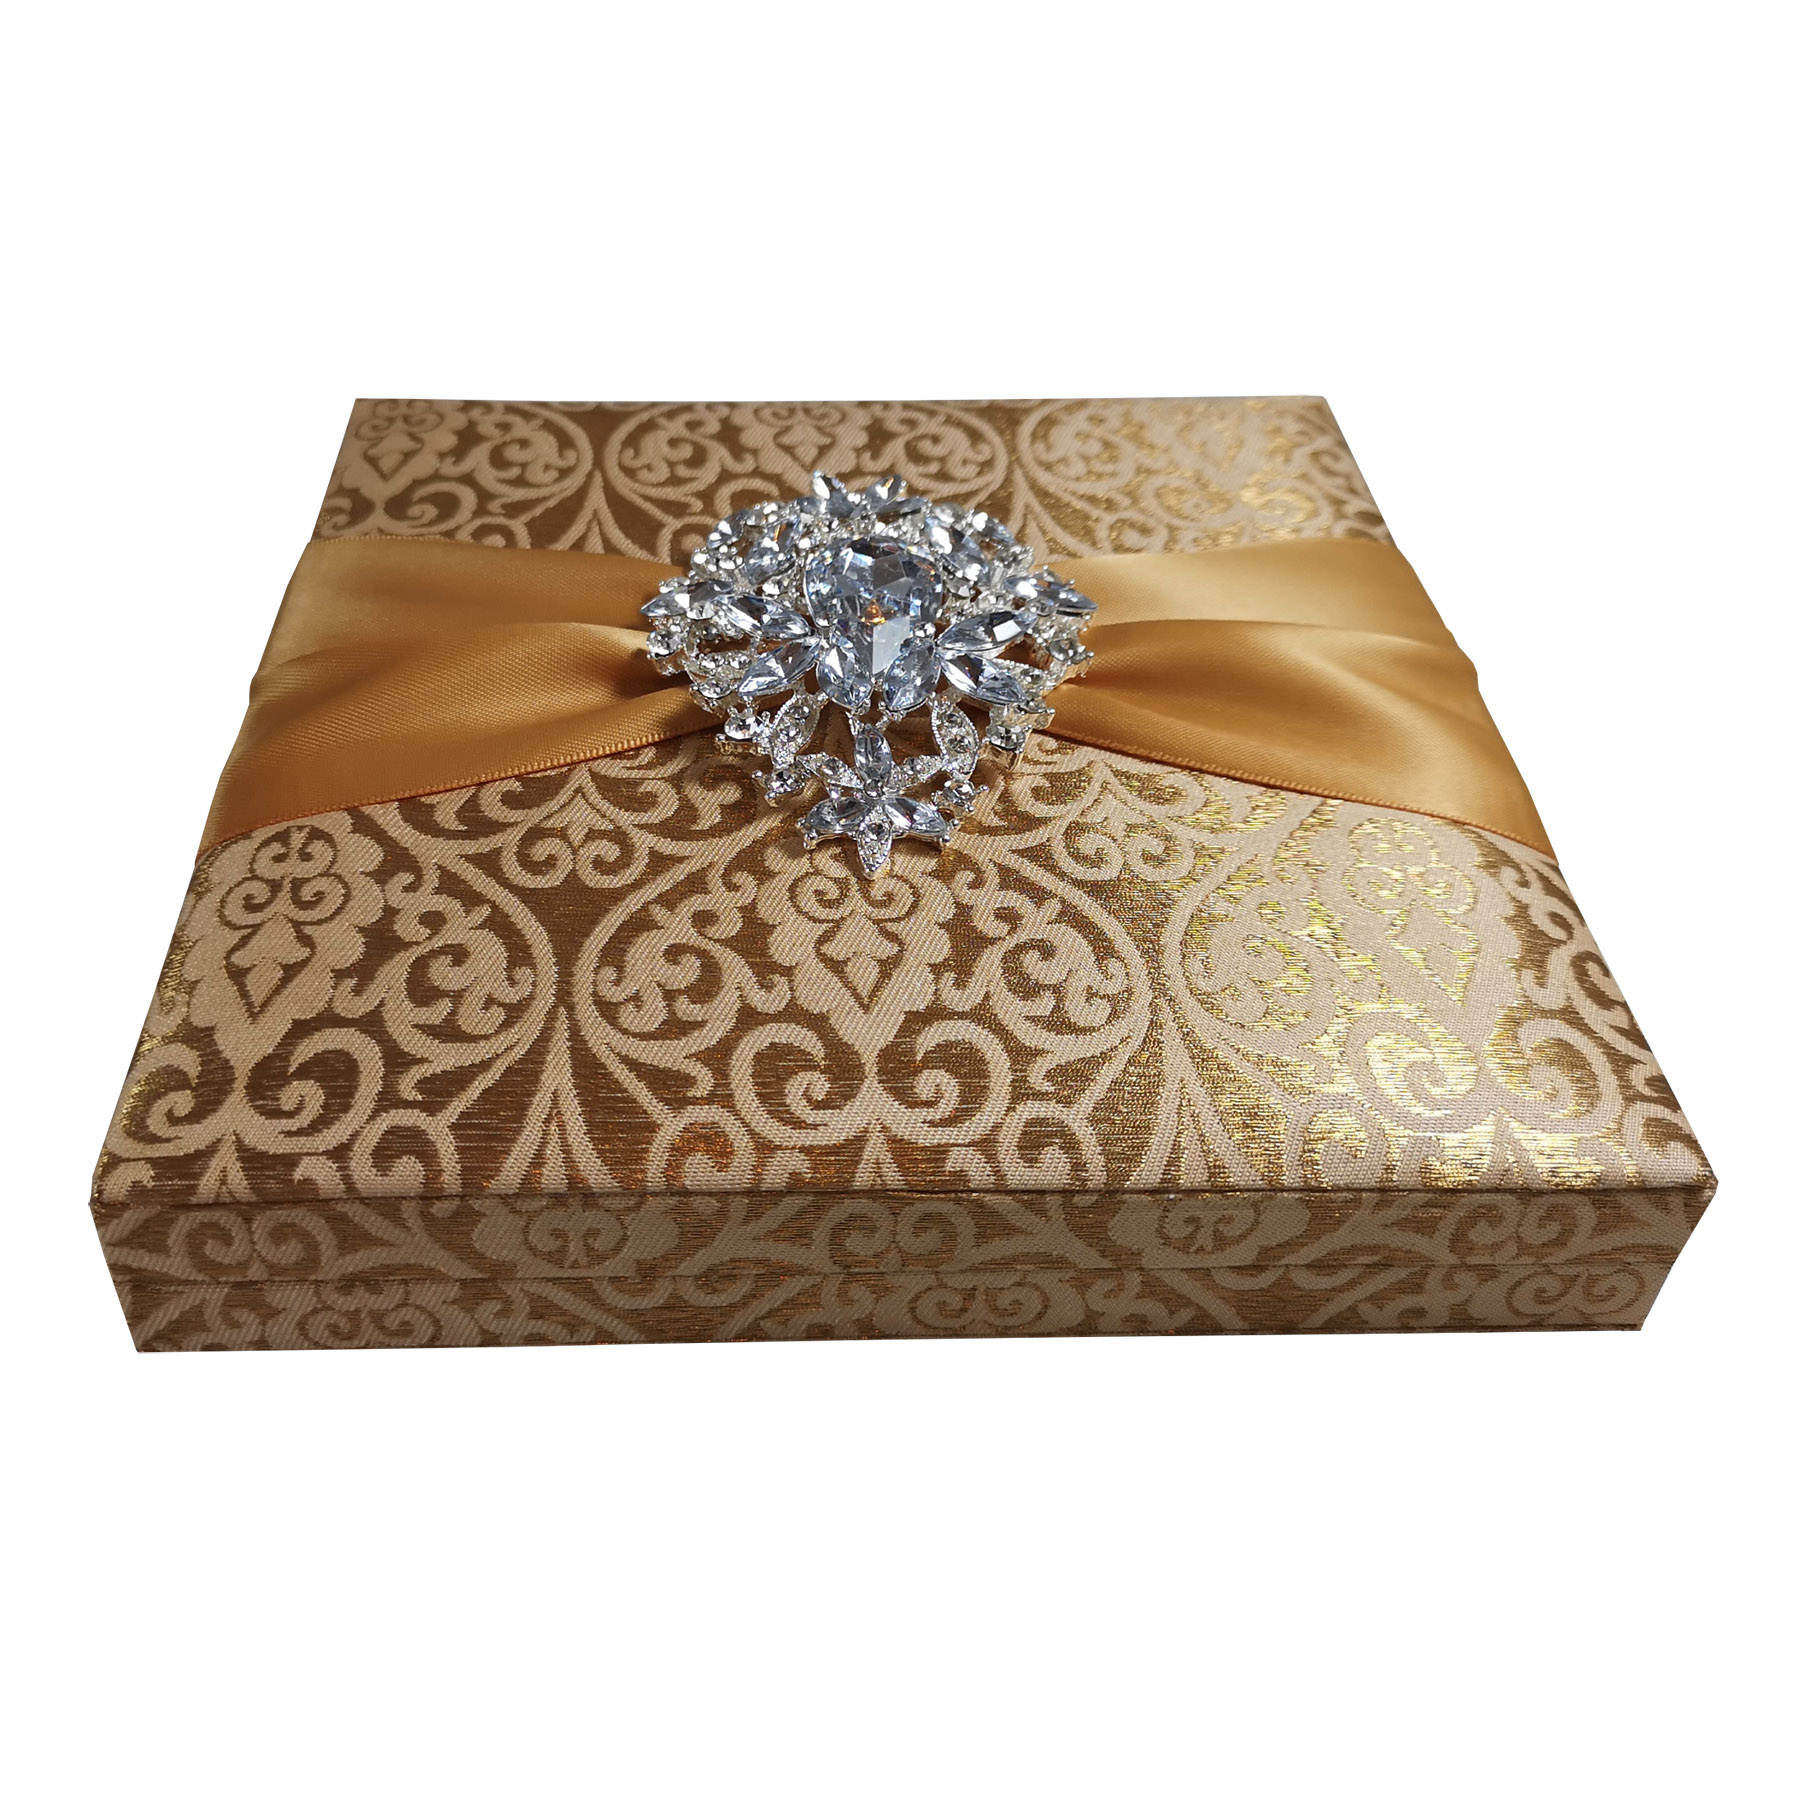 Chocolate Box Gifts in Wedding Invitation